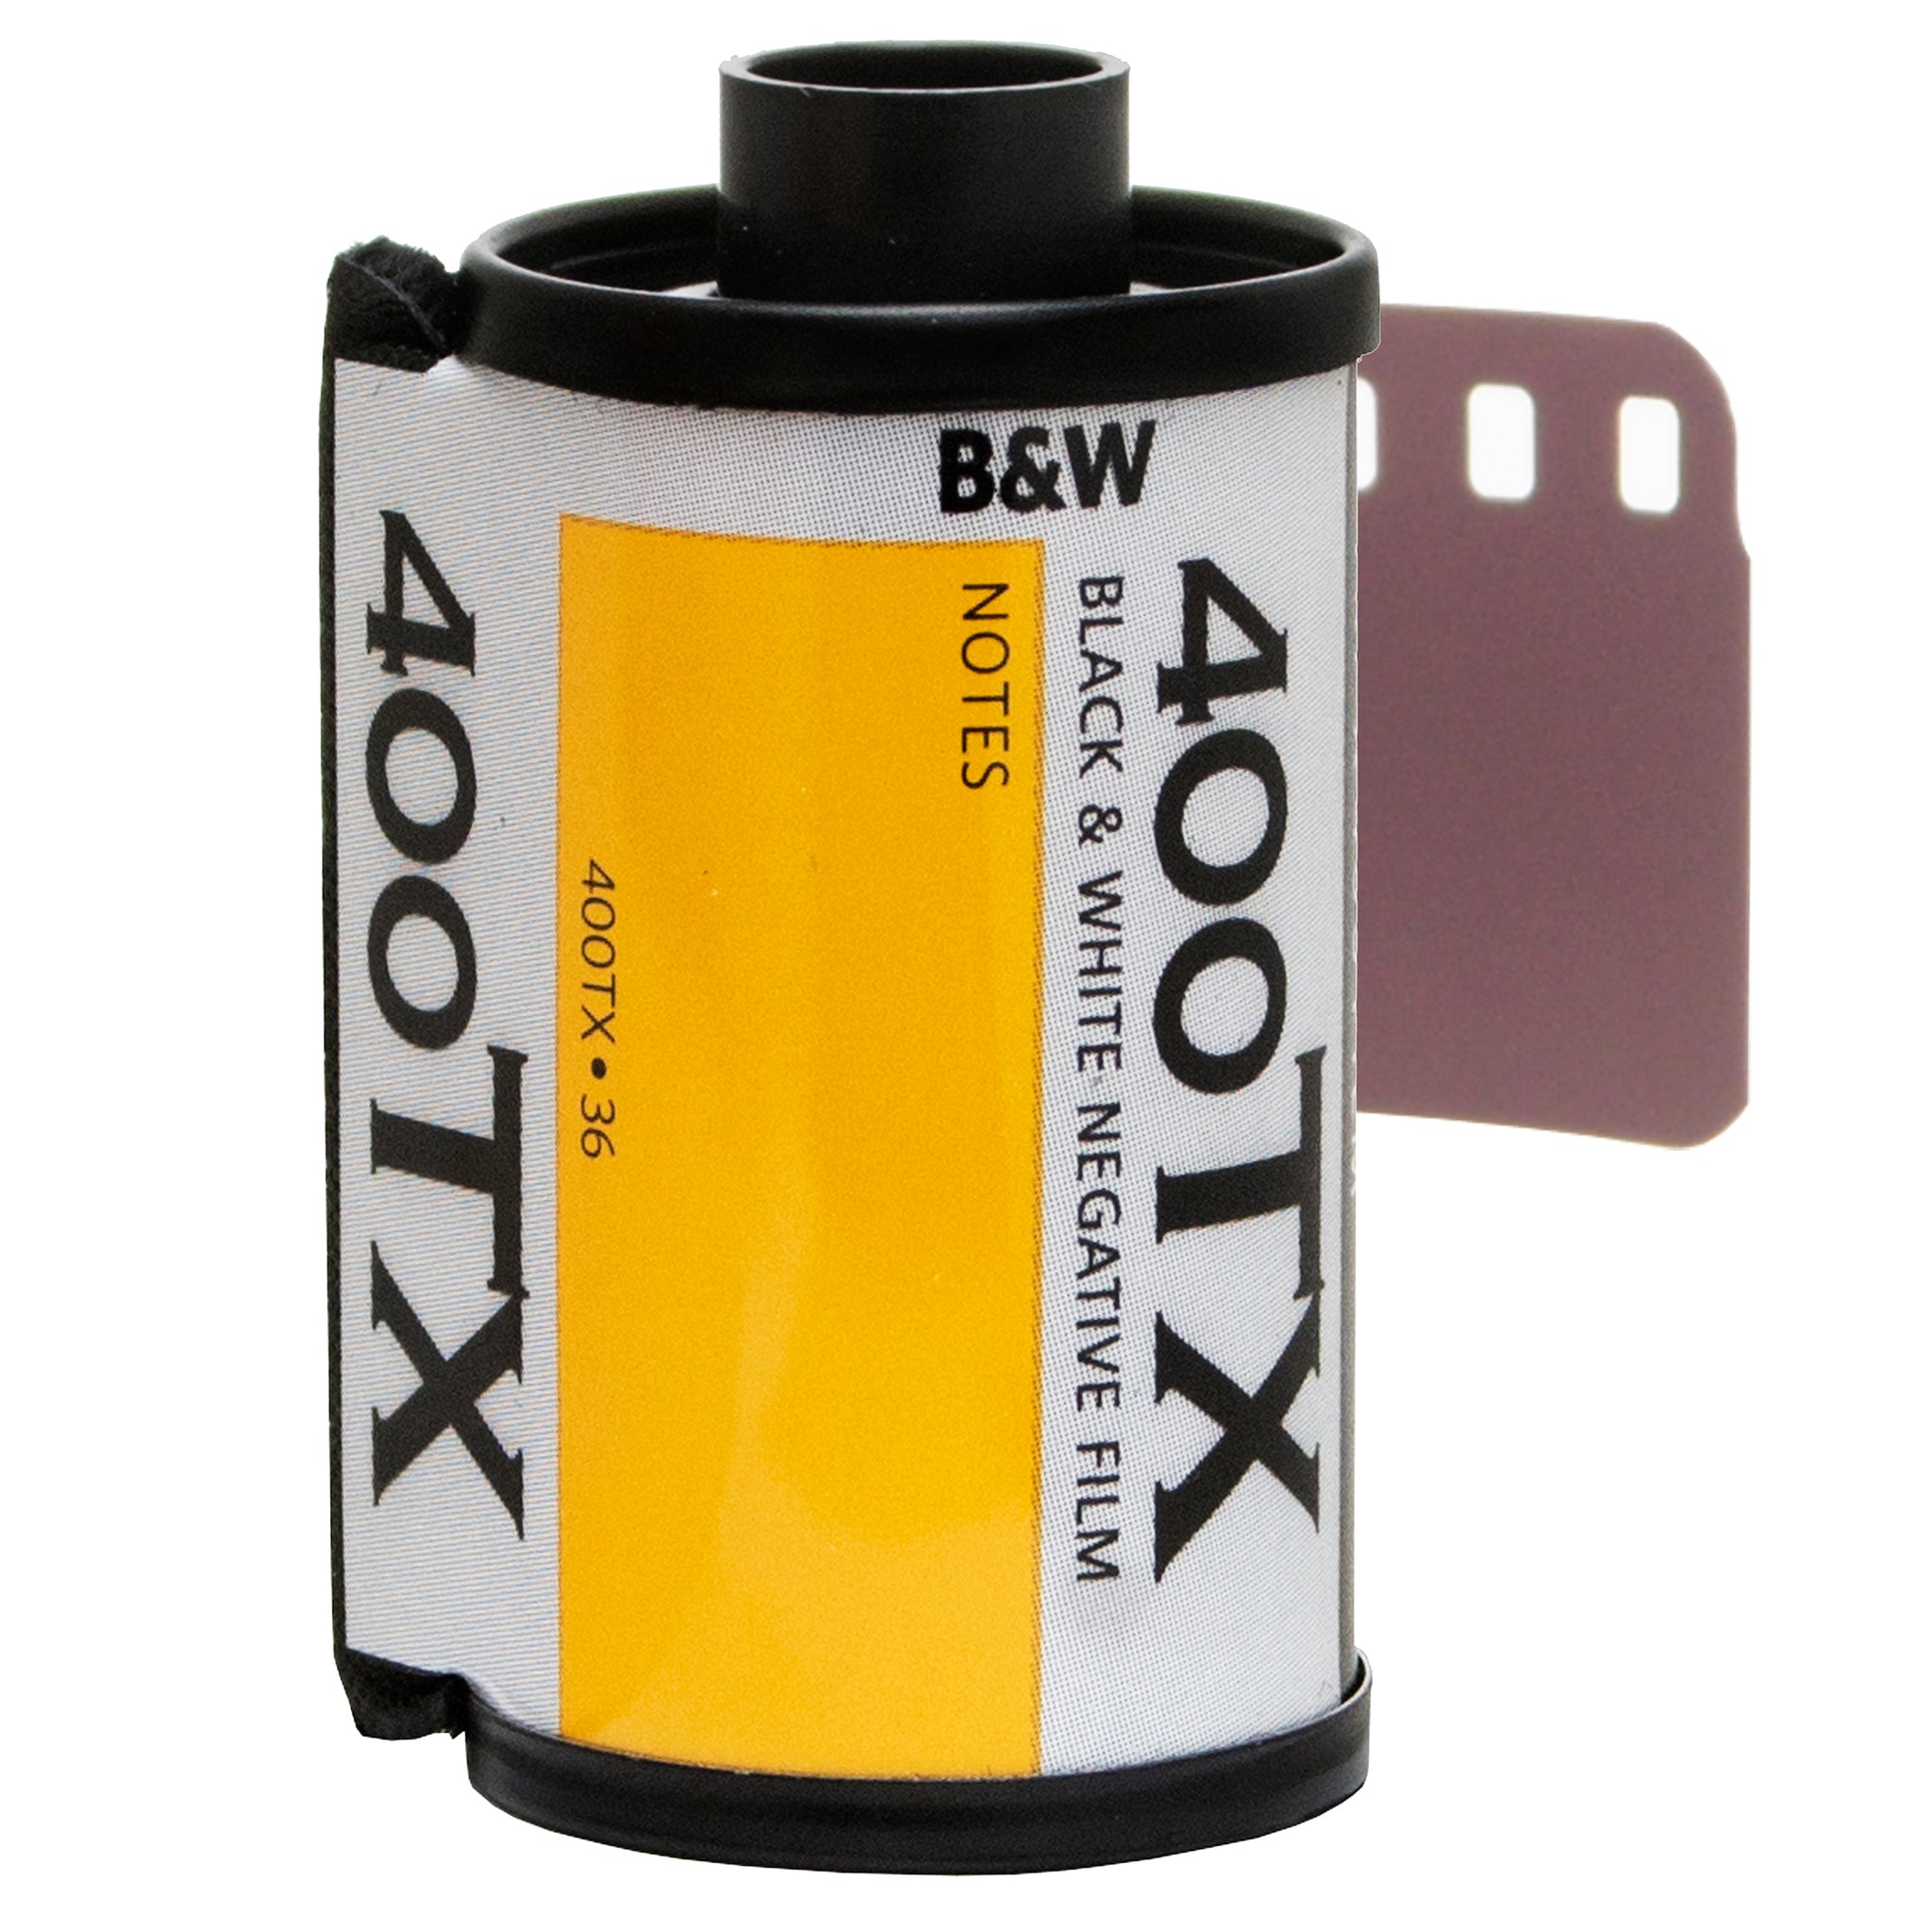 Kodak TX 400 BW Film (35mm Roll Film, 36 Exposures)